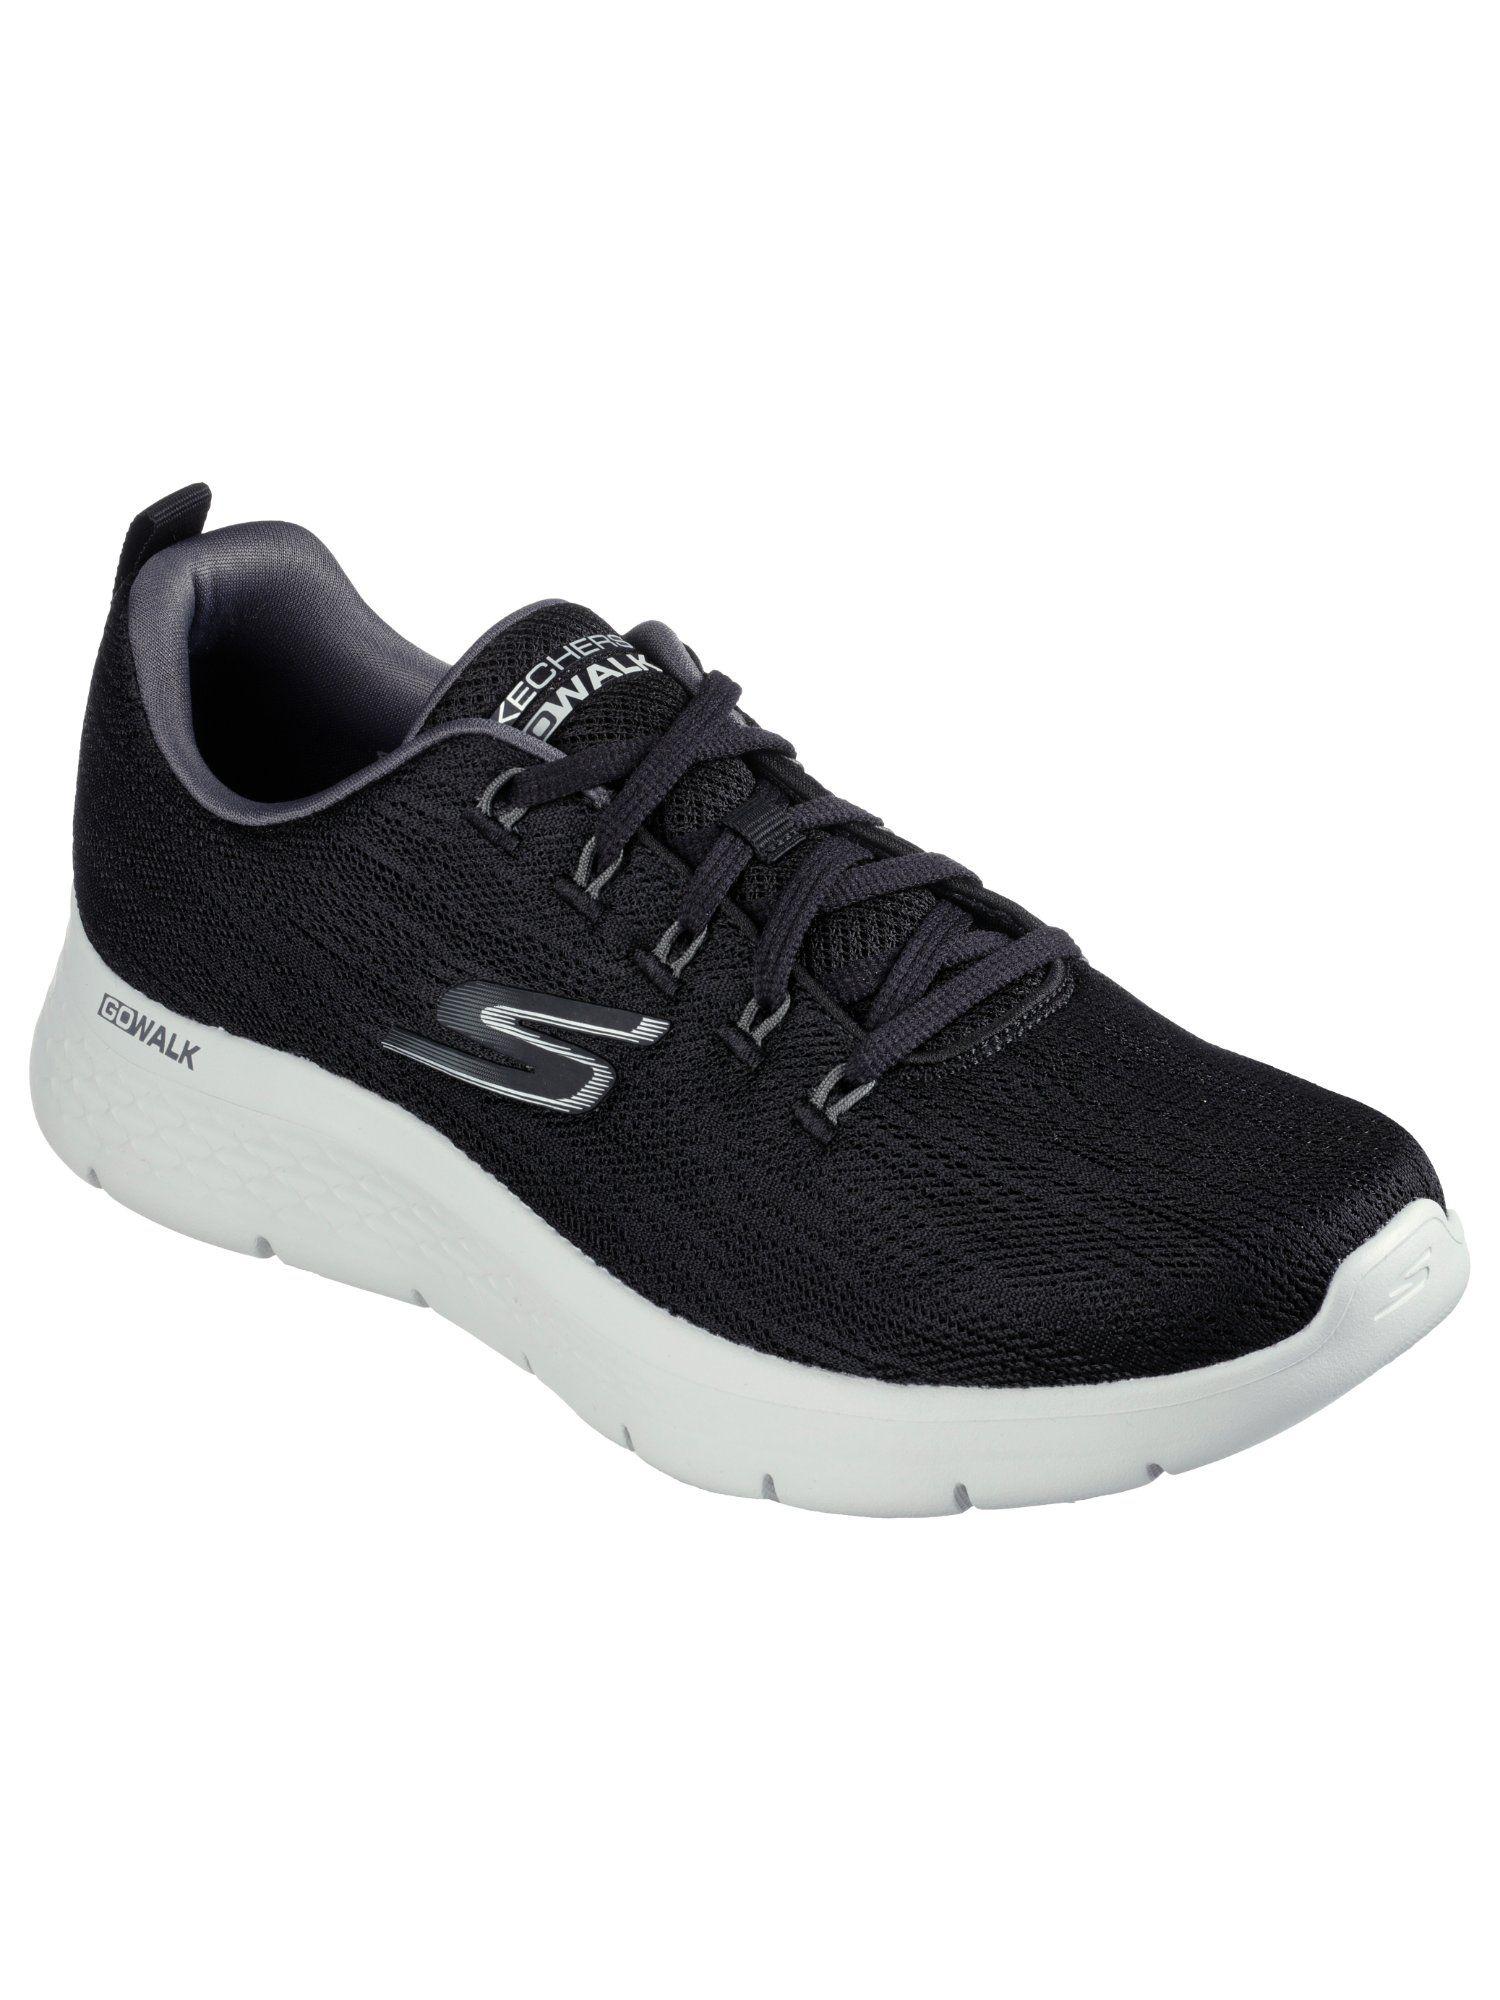 go-walk-flex-sandal-black-walking-shoes